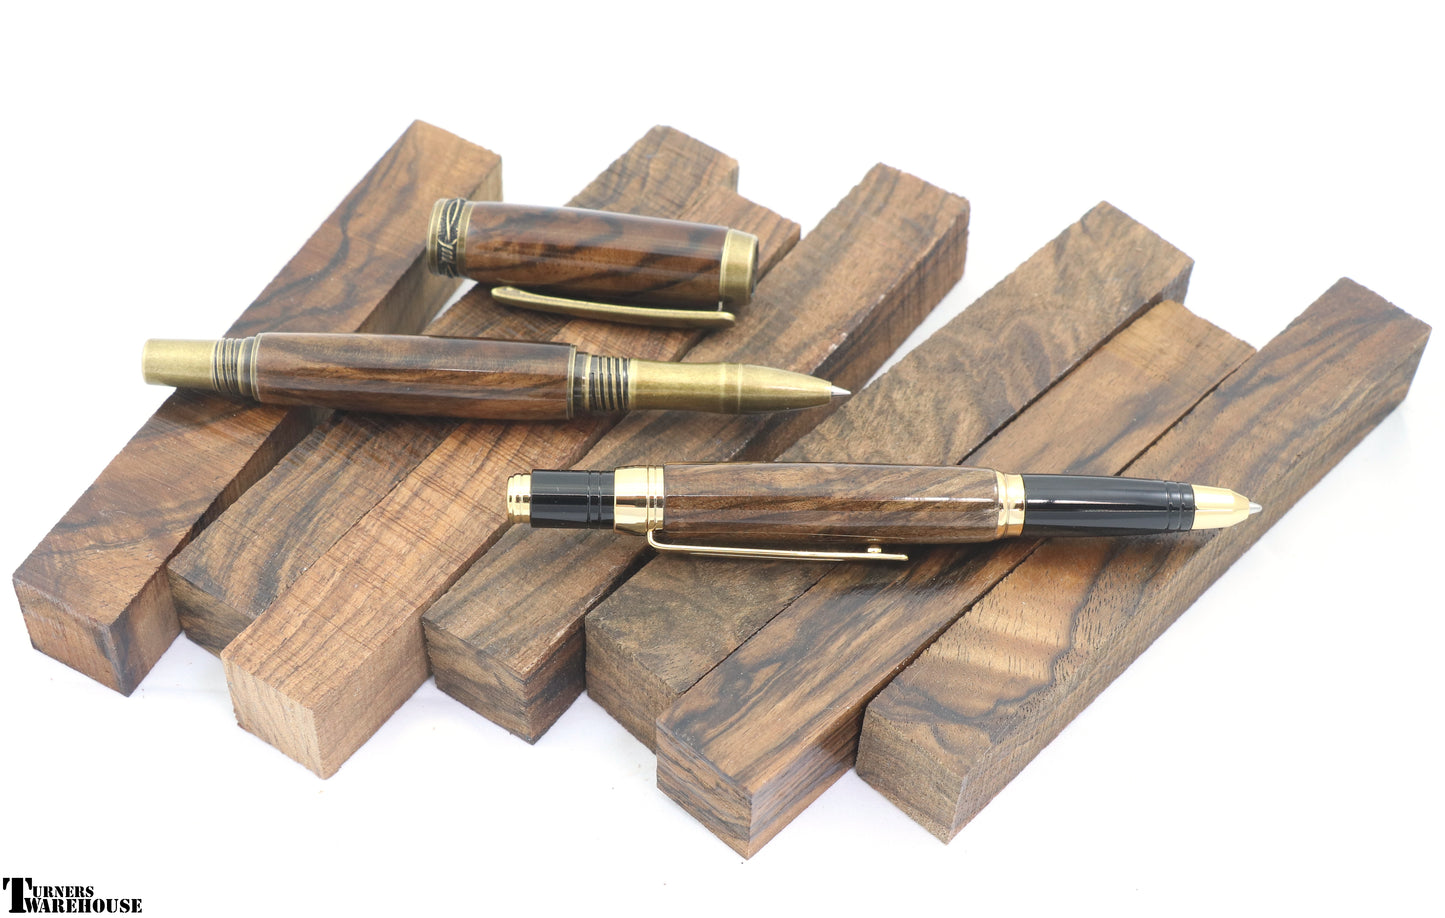 Wood Pen Blanks